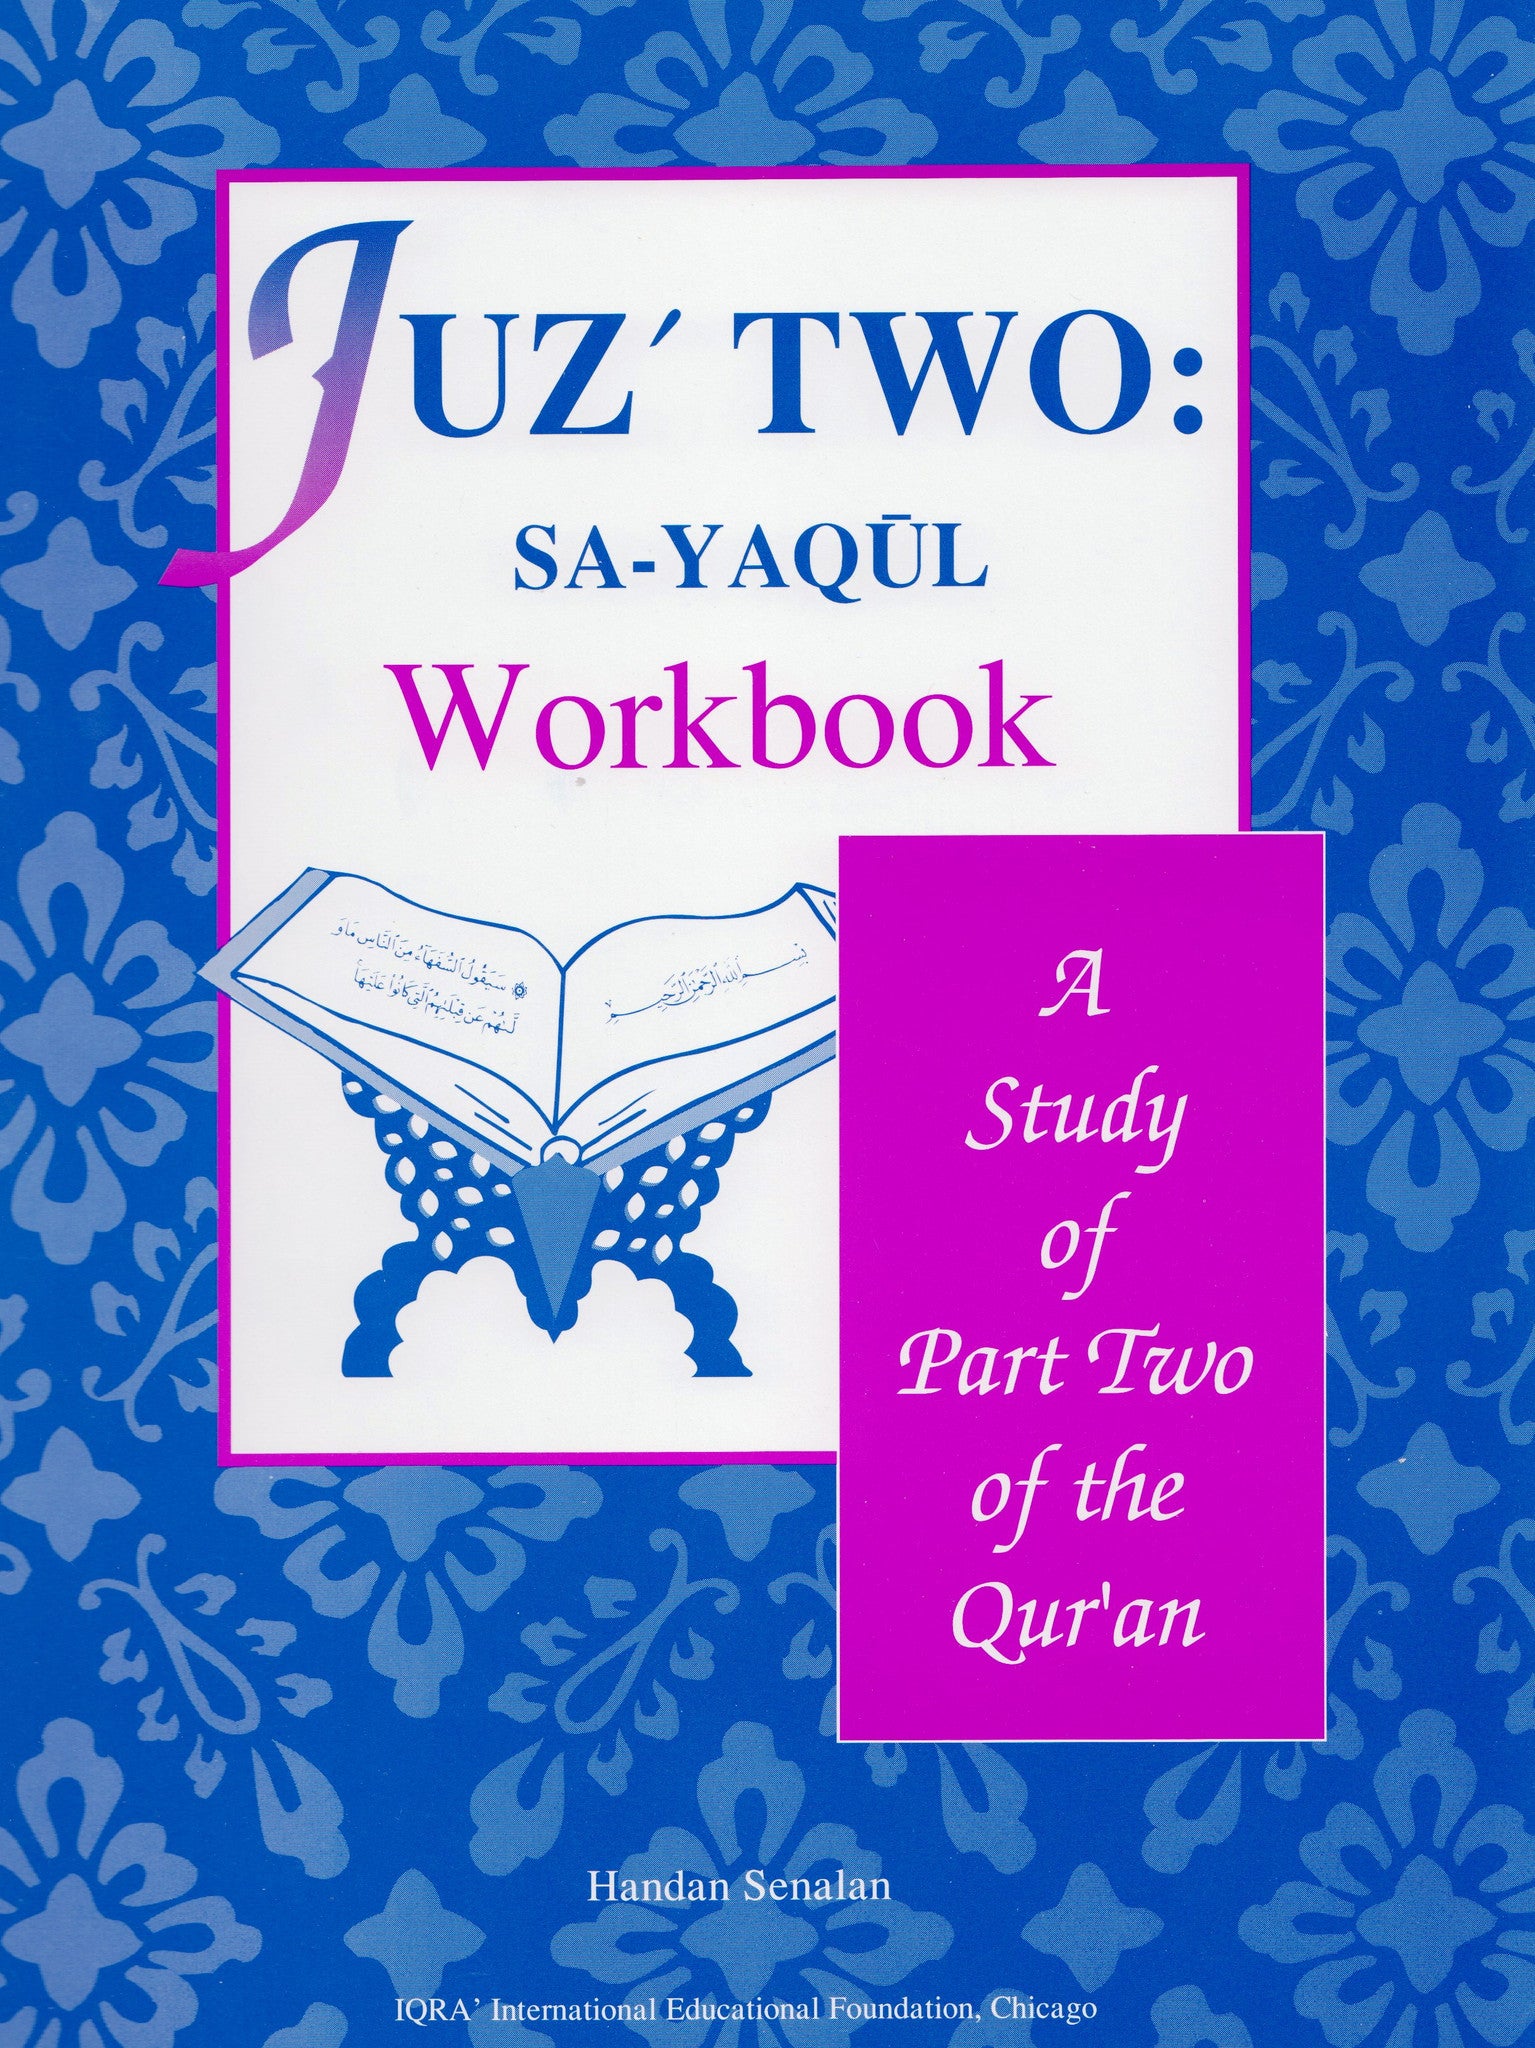 Juz' Two Sa-Yaqul Workbook